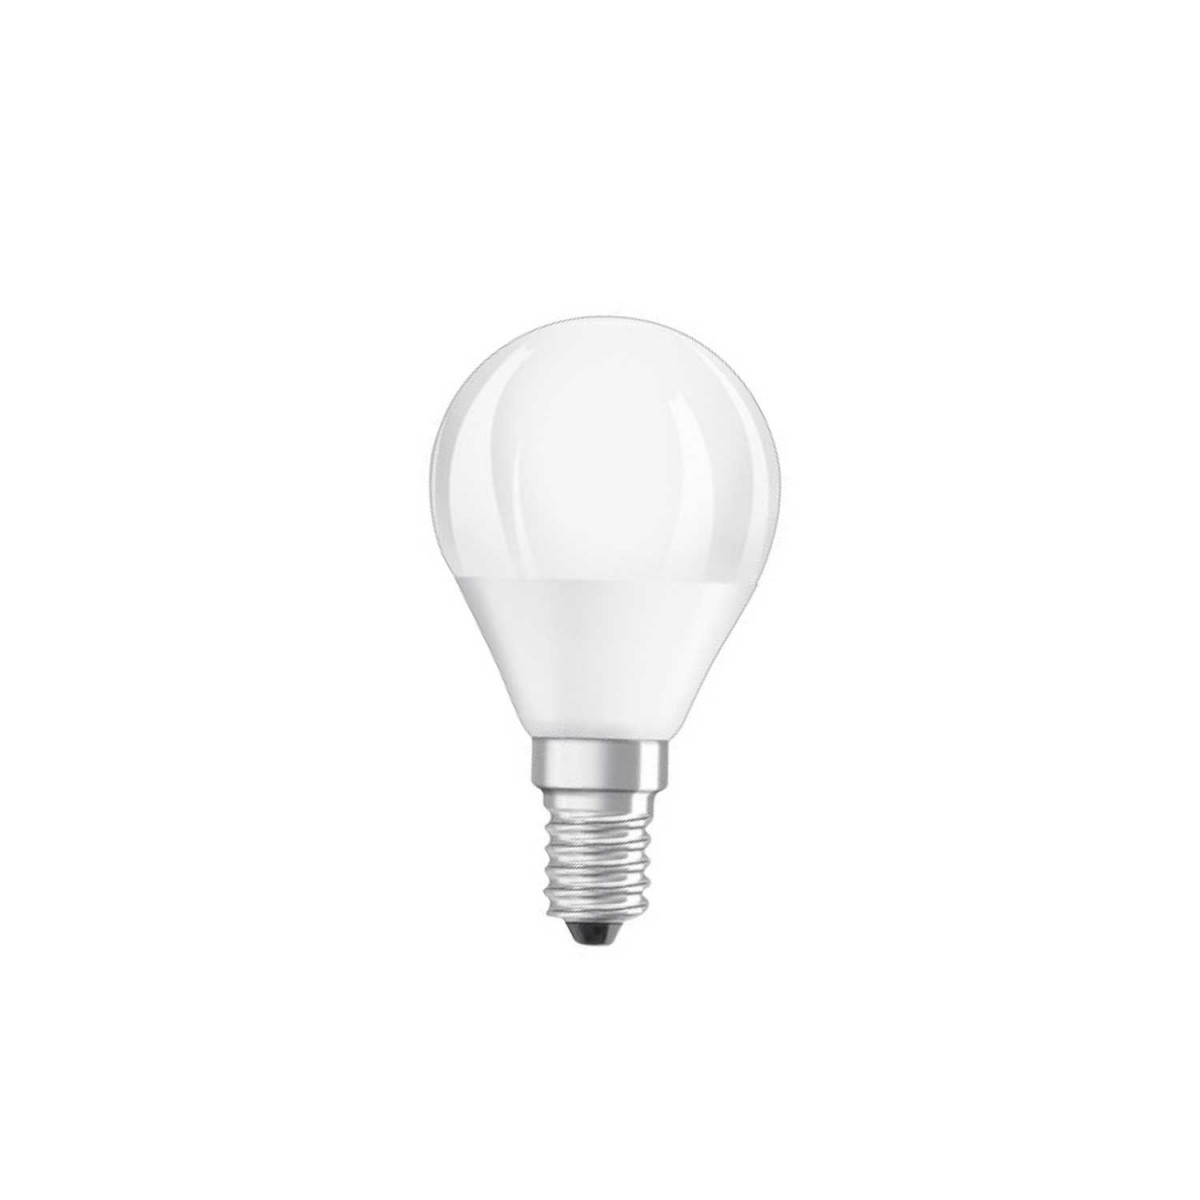 Sigmaled lighting - Lampadina LED E14 6W (equivalente 40W) - 480